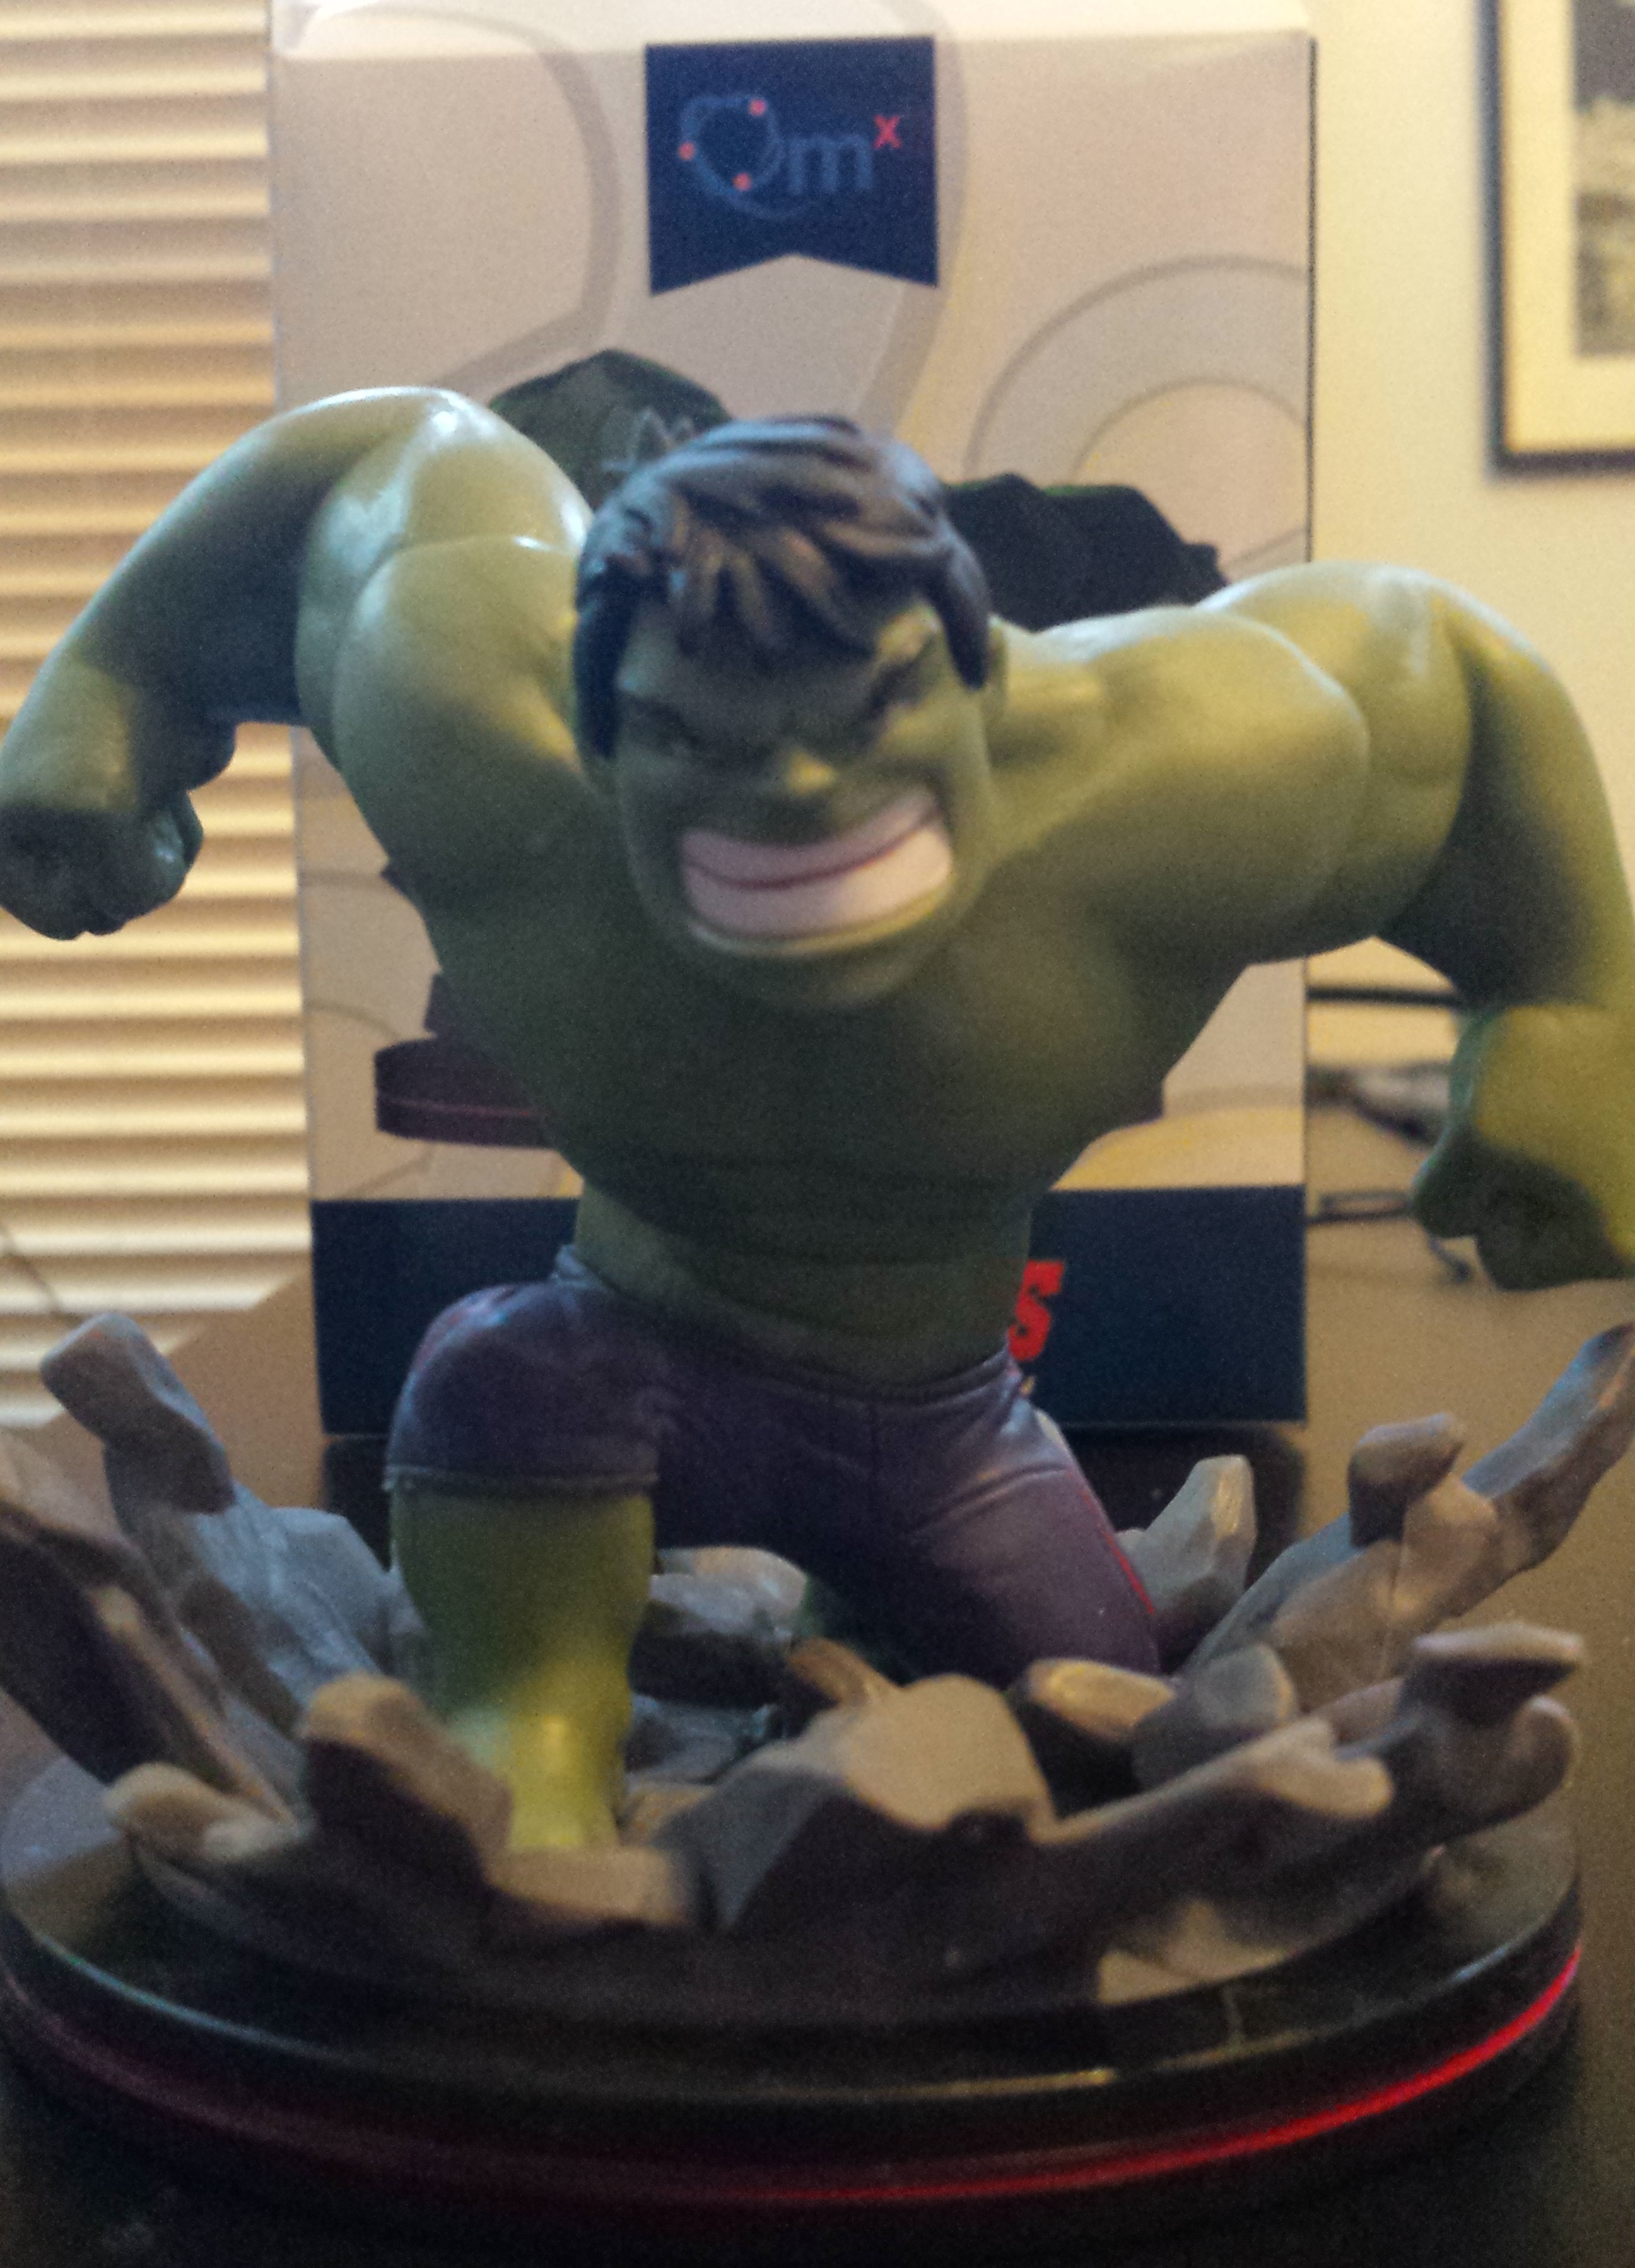 May's loot crate, power, the hulk